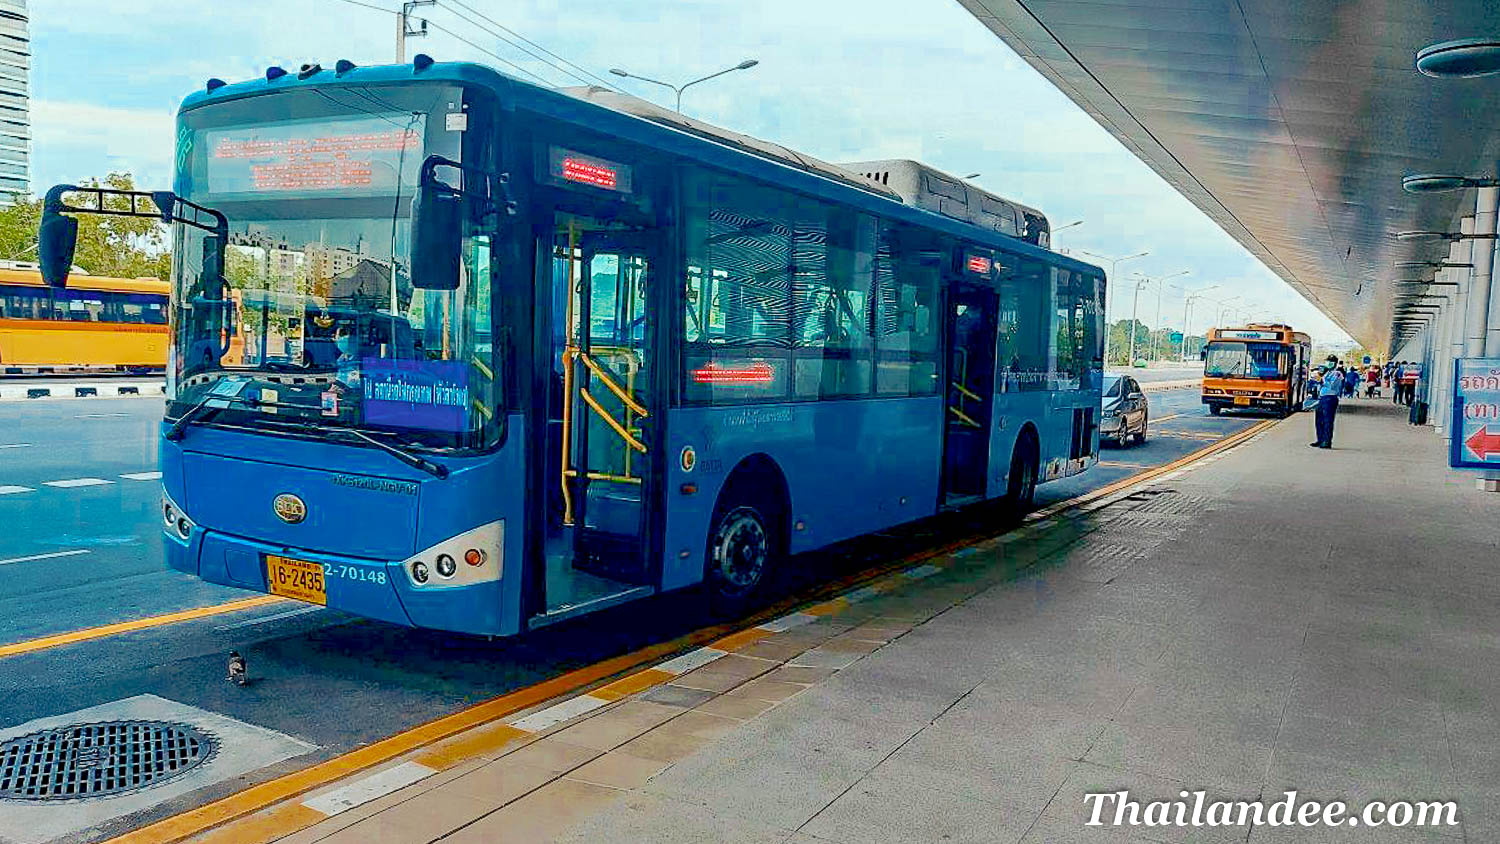  free bus between Hua Lamphong station and Krung Thep Aphiwat